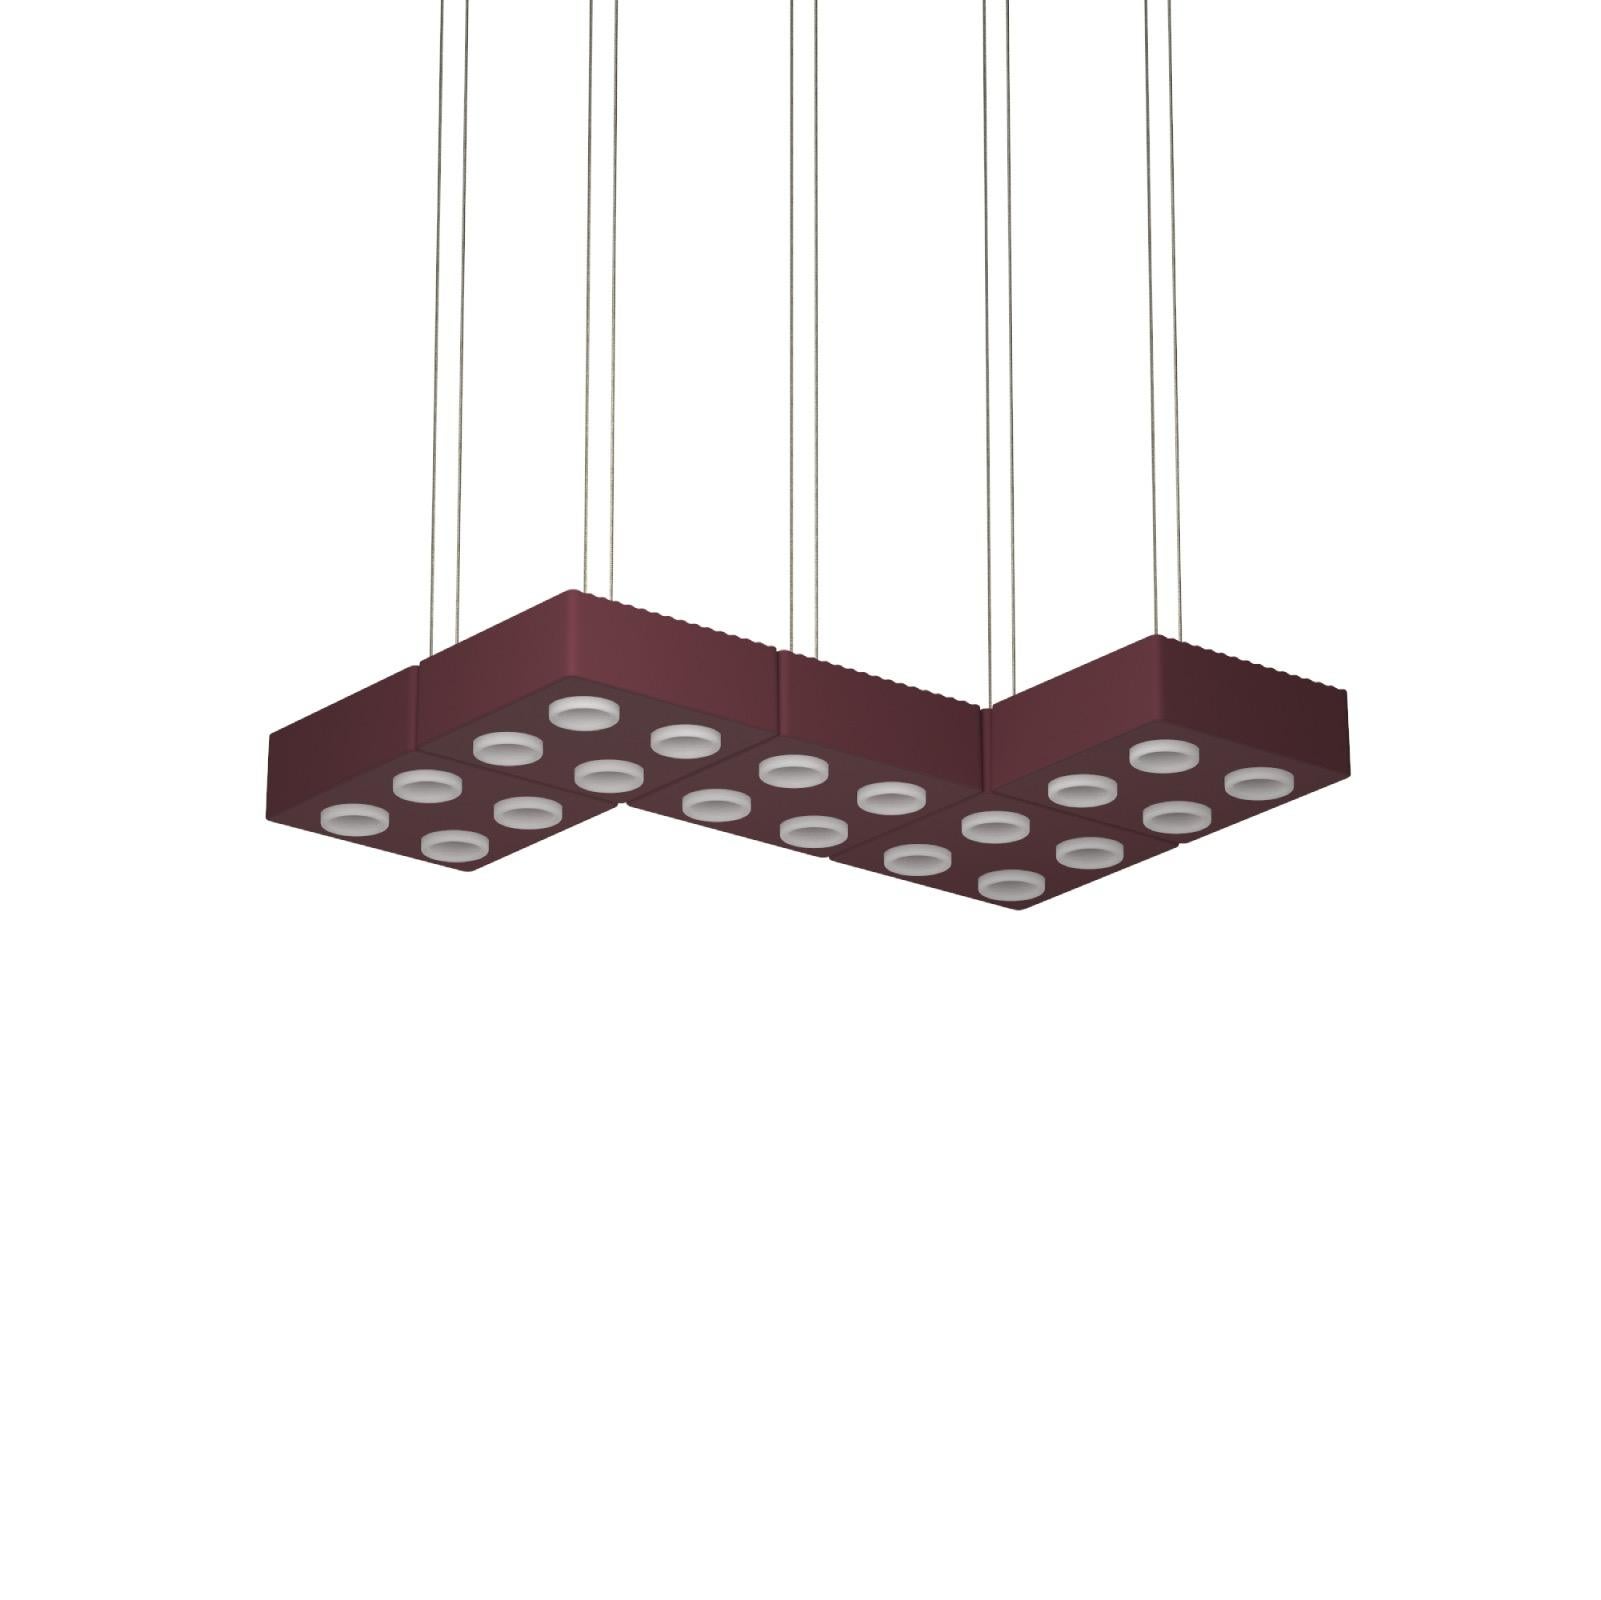 Domino Pendant lamp by Sylvain Willenz x AGO Lighting
Burgundy - Quintet Pendant Lamp

Materials: Aluminum 
Light Source: Integrated LED (COB), DC
Watt. 75 W (15W x 5)
Color temp. 2700 / 3000K
Cable Length: 3m 

Available colors:
Charcoal,